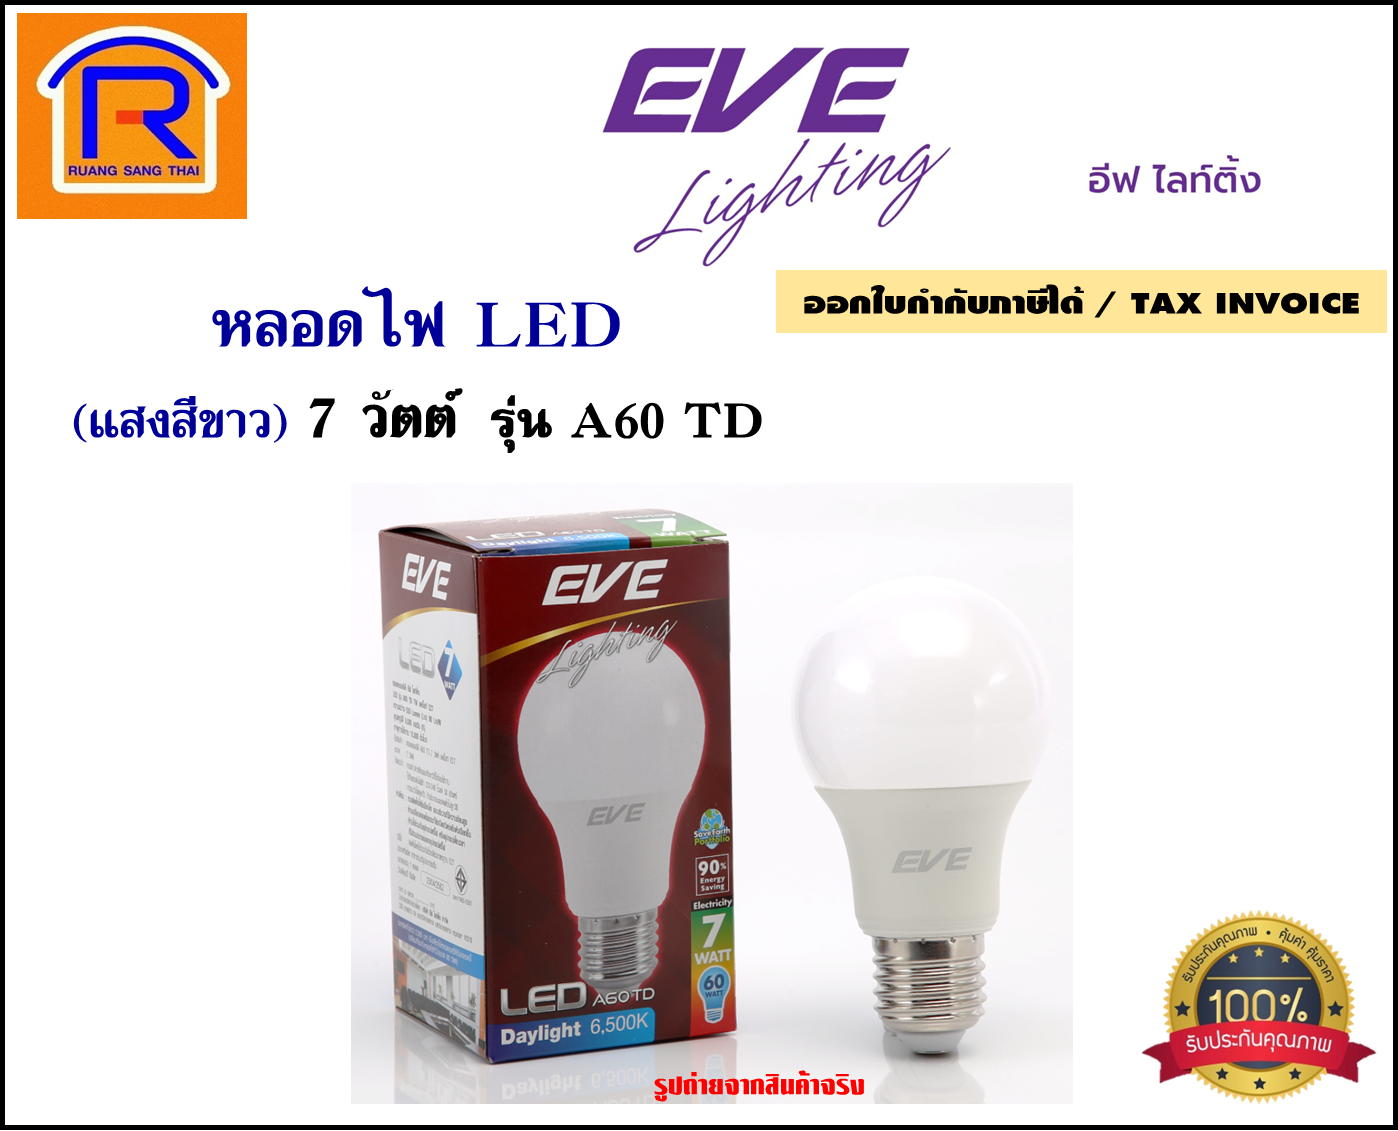 EVE lighting หลอดไฟ LED A60 TD ขนาด 7 วัตต์